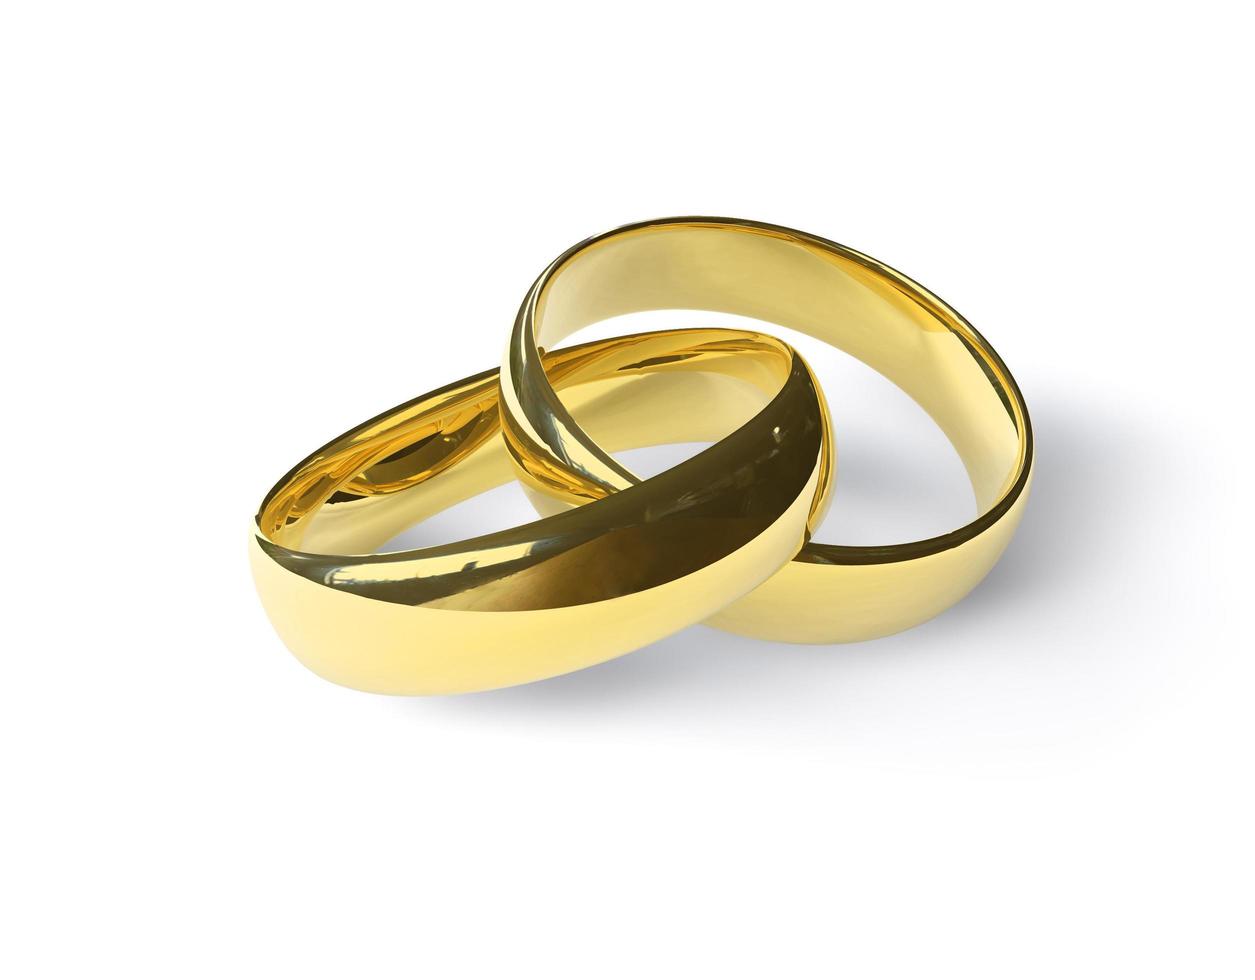 casal anéis de casamento de ouro abstrato luxo círculos de luz holofote efeito de luz em branco foto